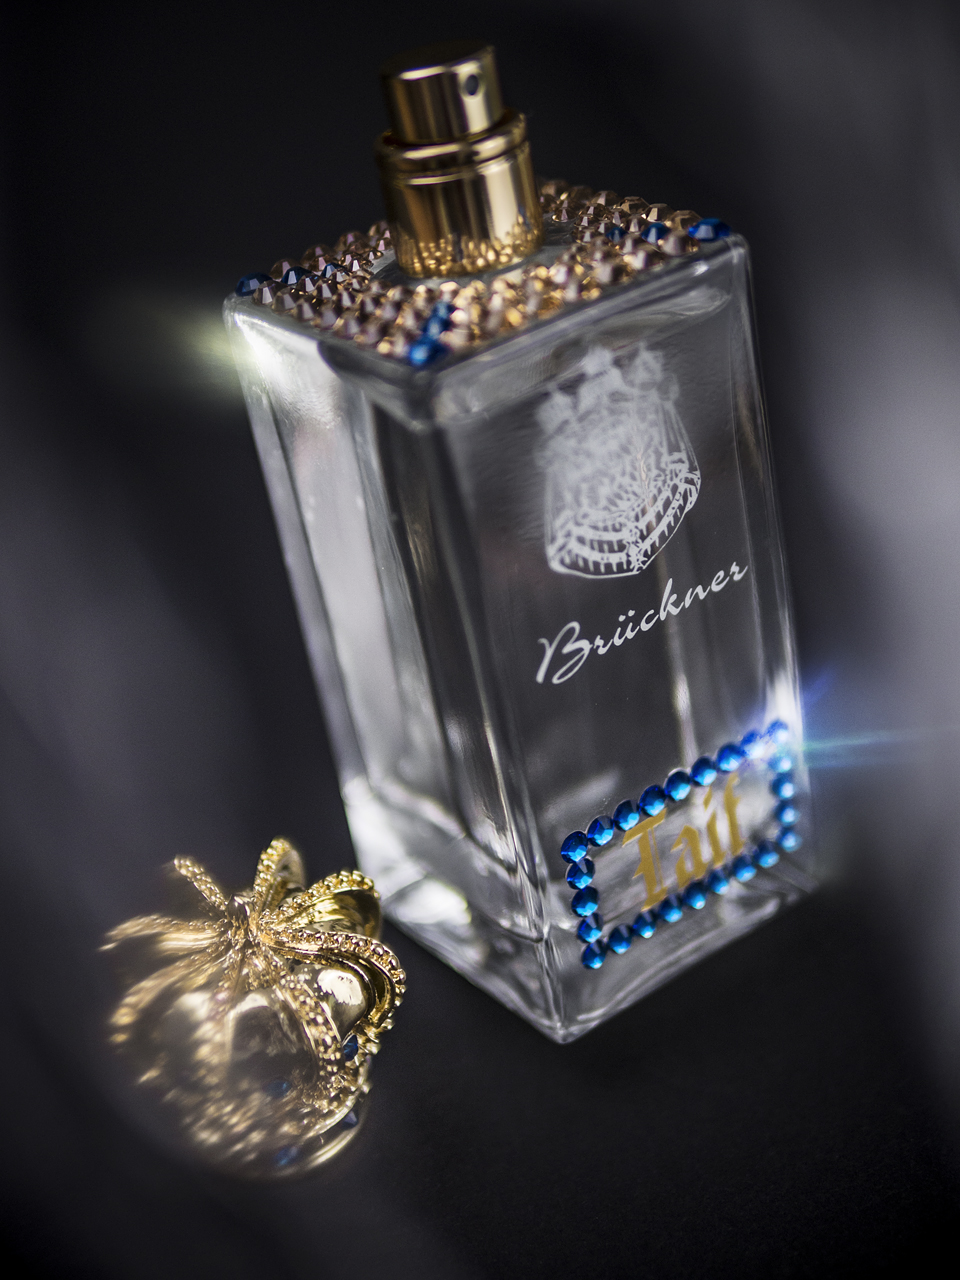 Les Royales, Parfümerie Brückner, königliche Parfüm-Kollektion, ElisaZunder Blogazine, Parfum Review, Duftnoten, Düfte